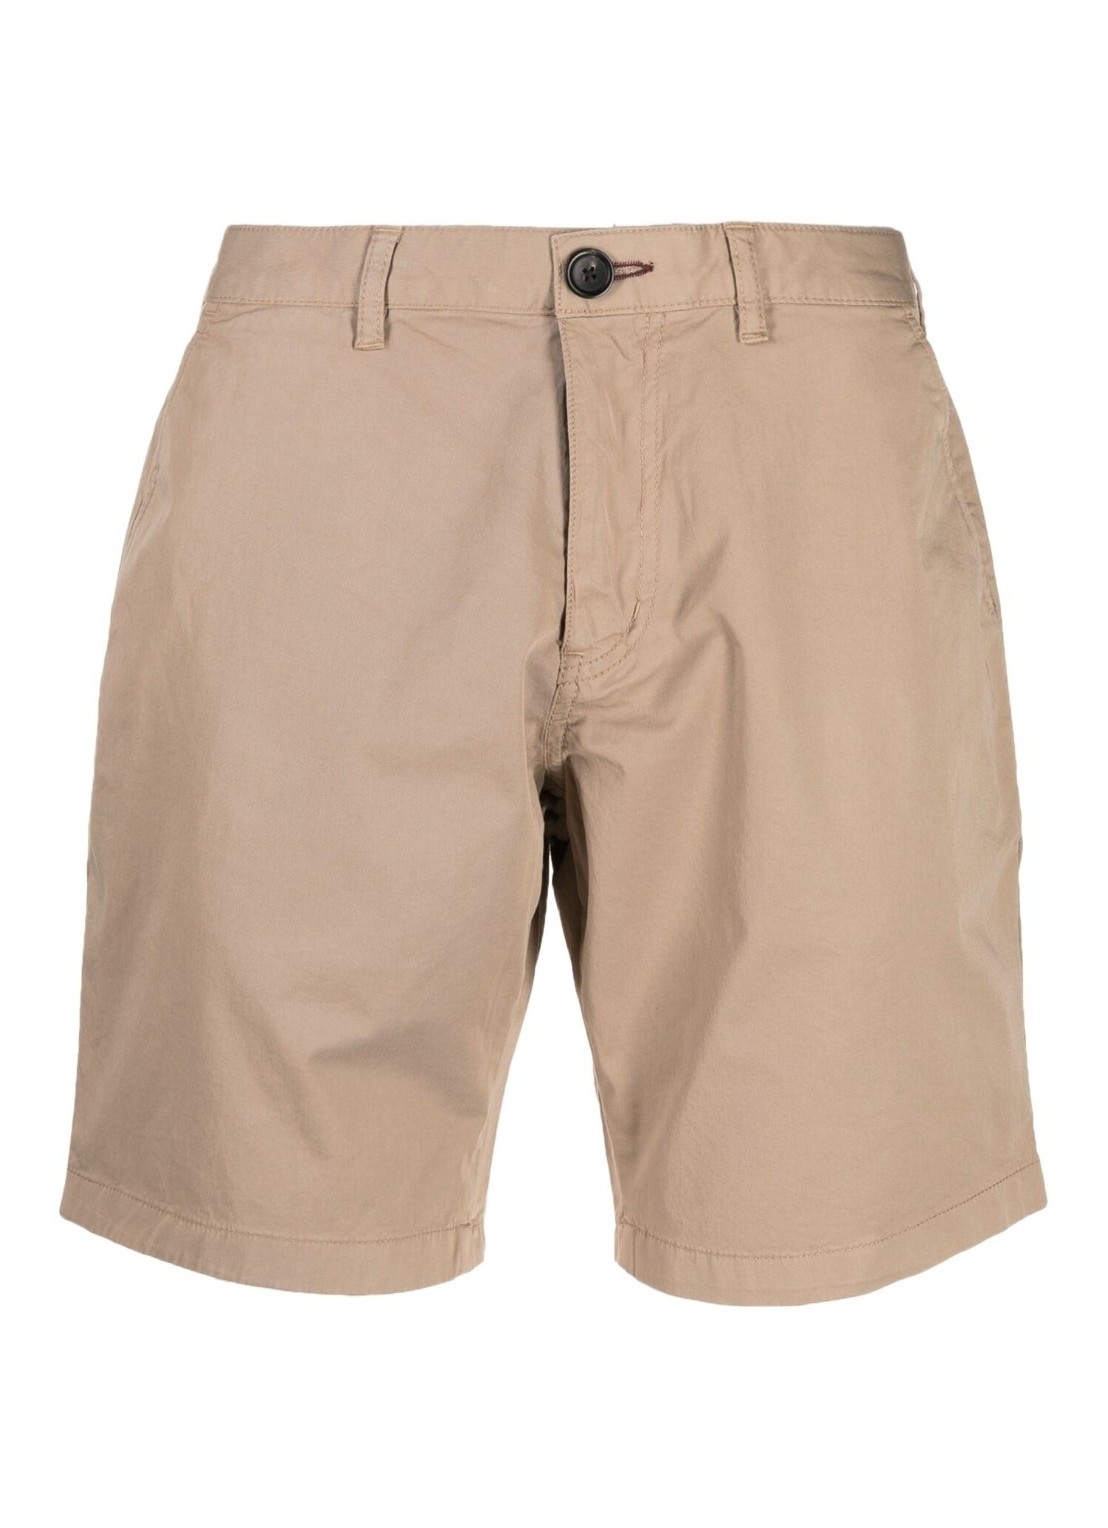 Pantalon corto ps mens shorts - m2r035rk21697 64 talla marron
 